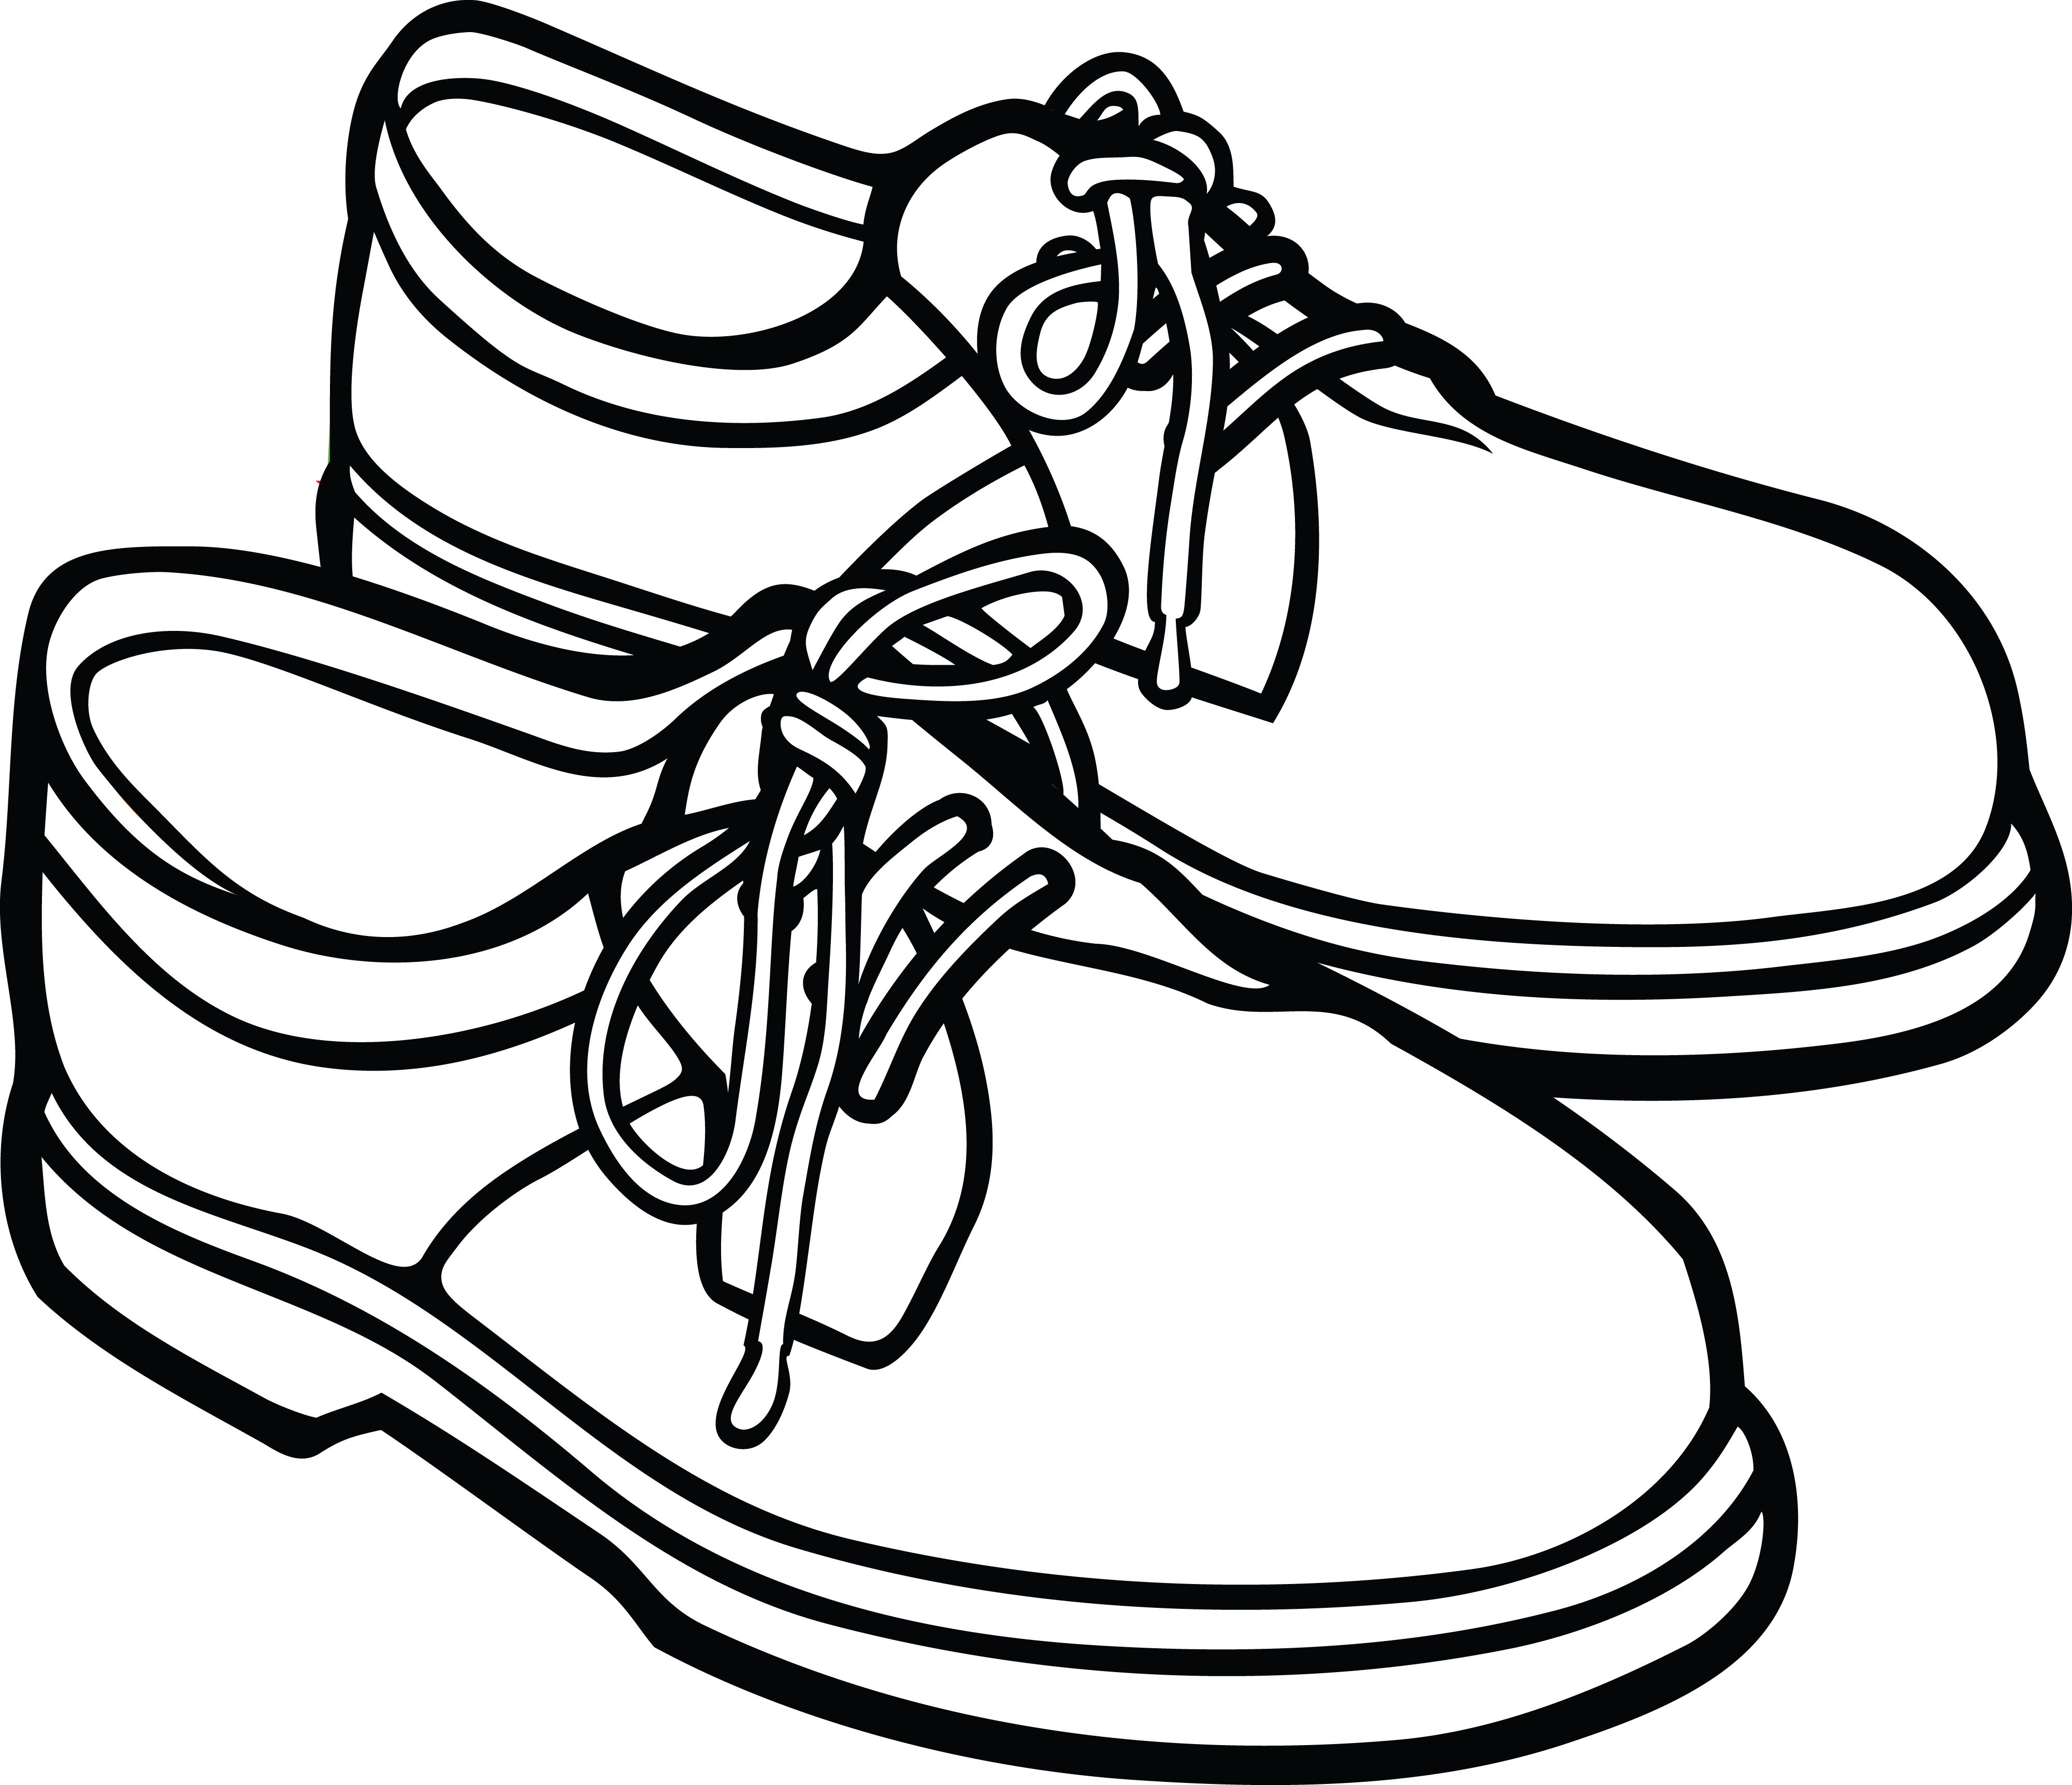 shoes clipart image